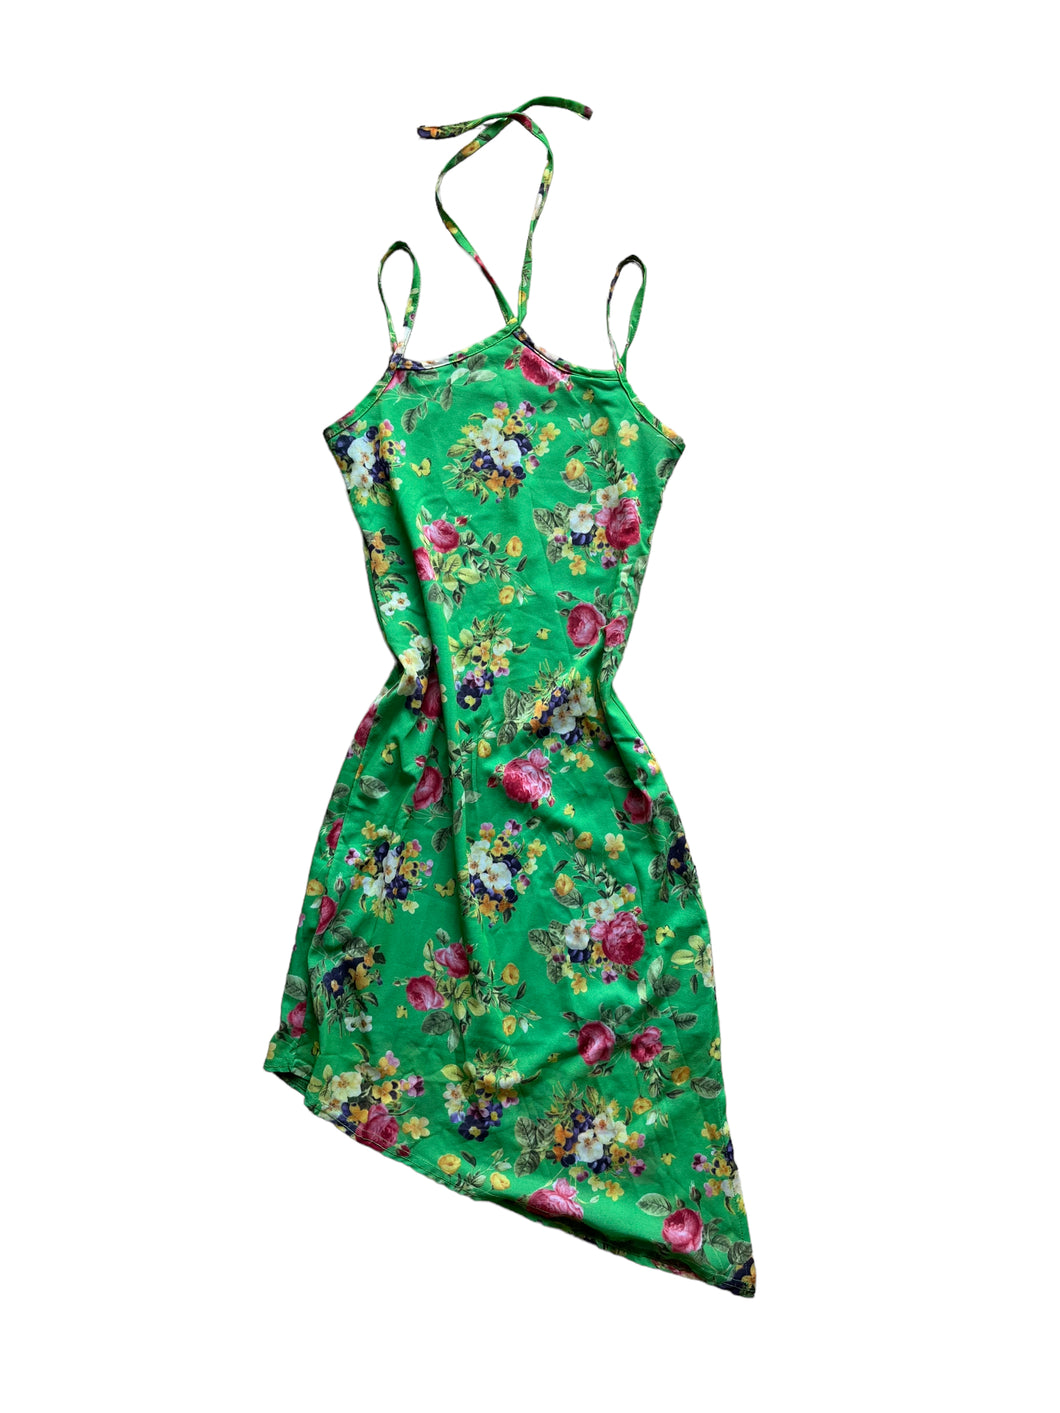 Cute floral asymmetric halter dress